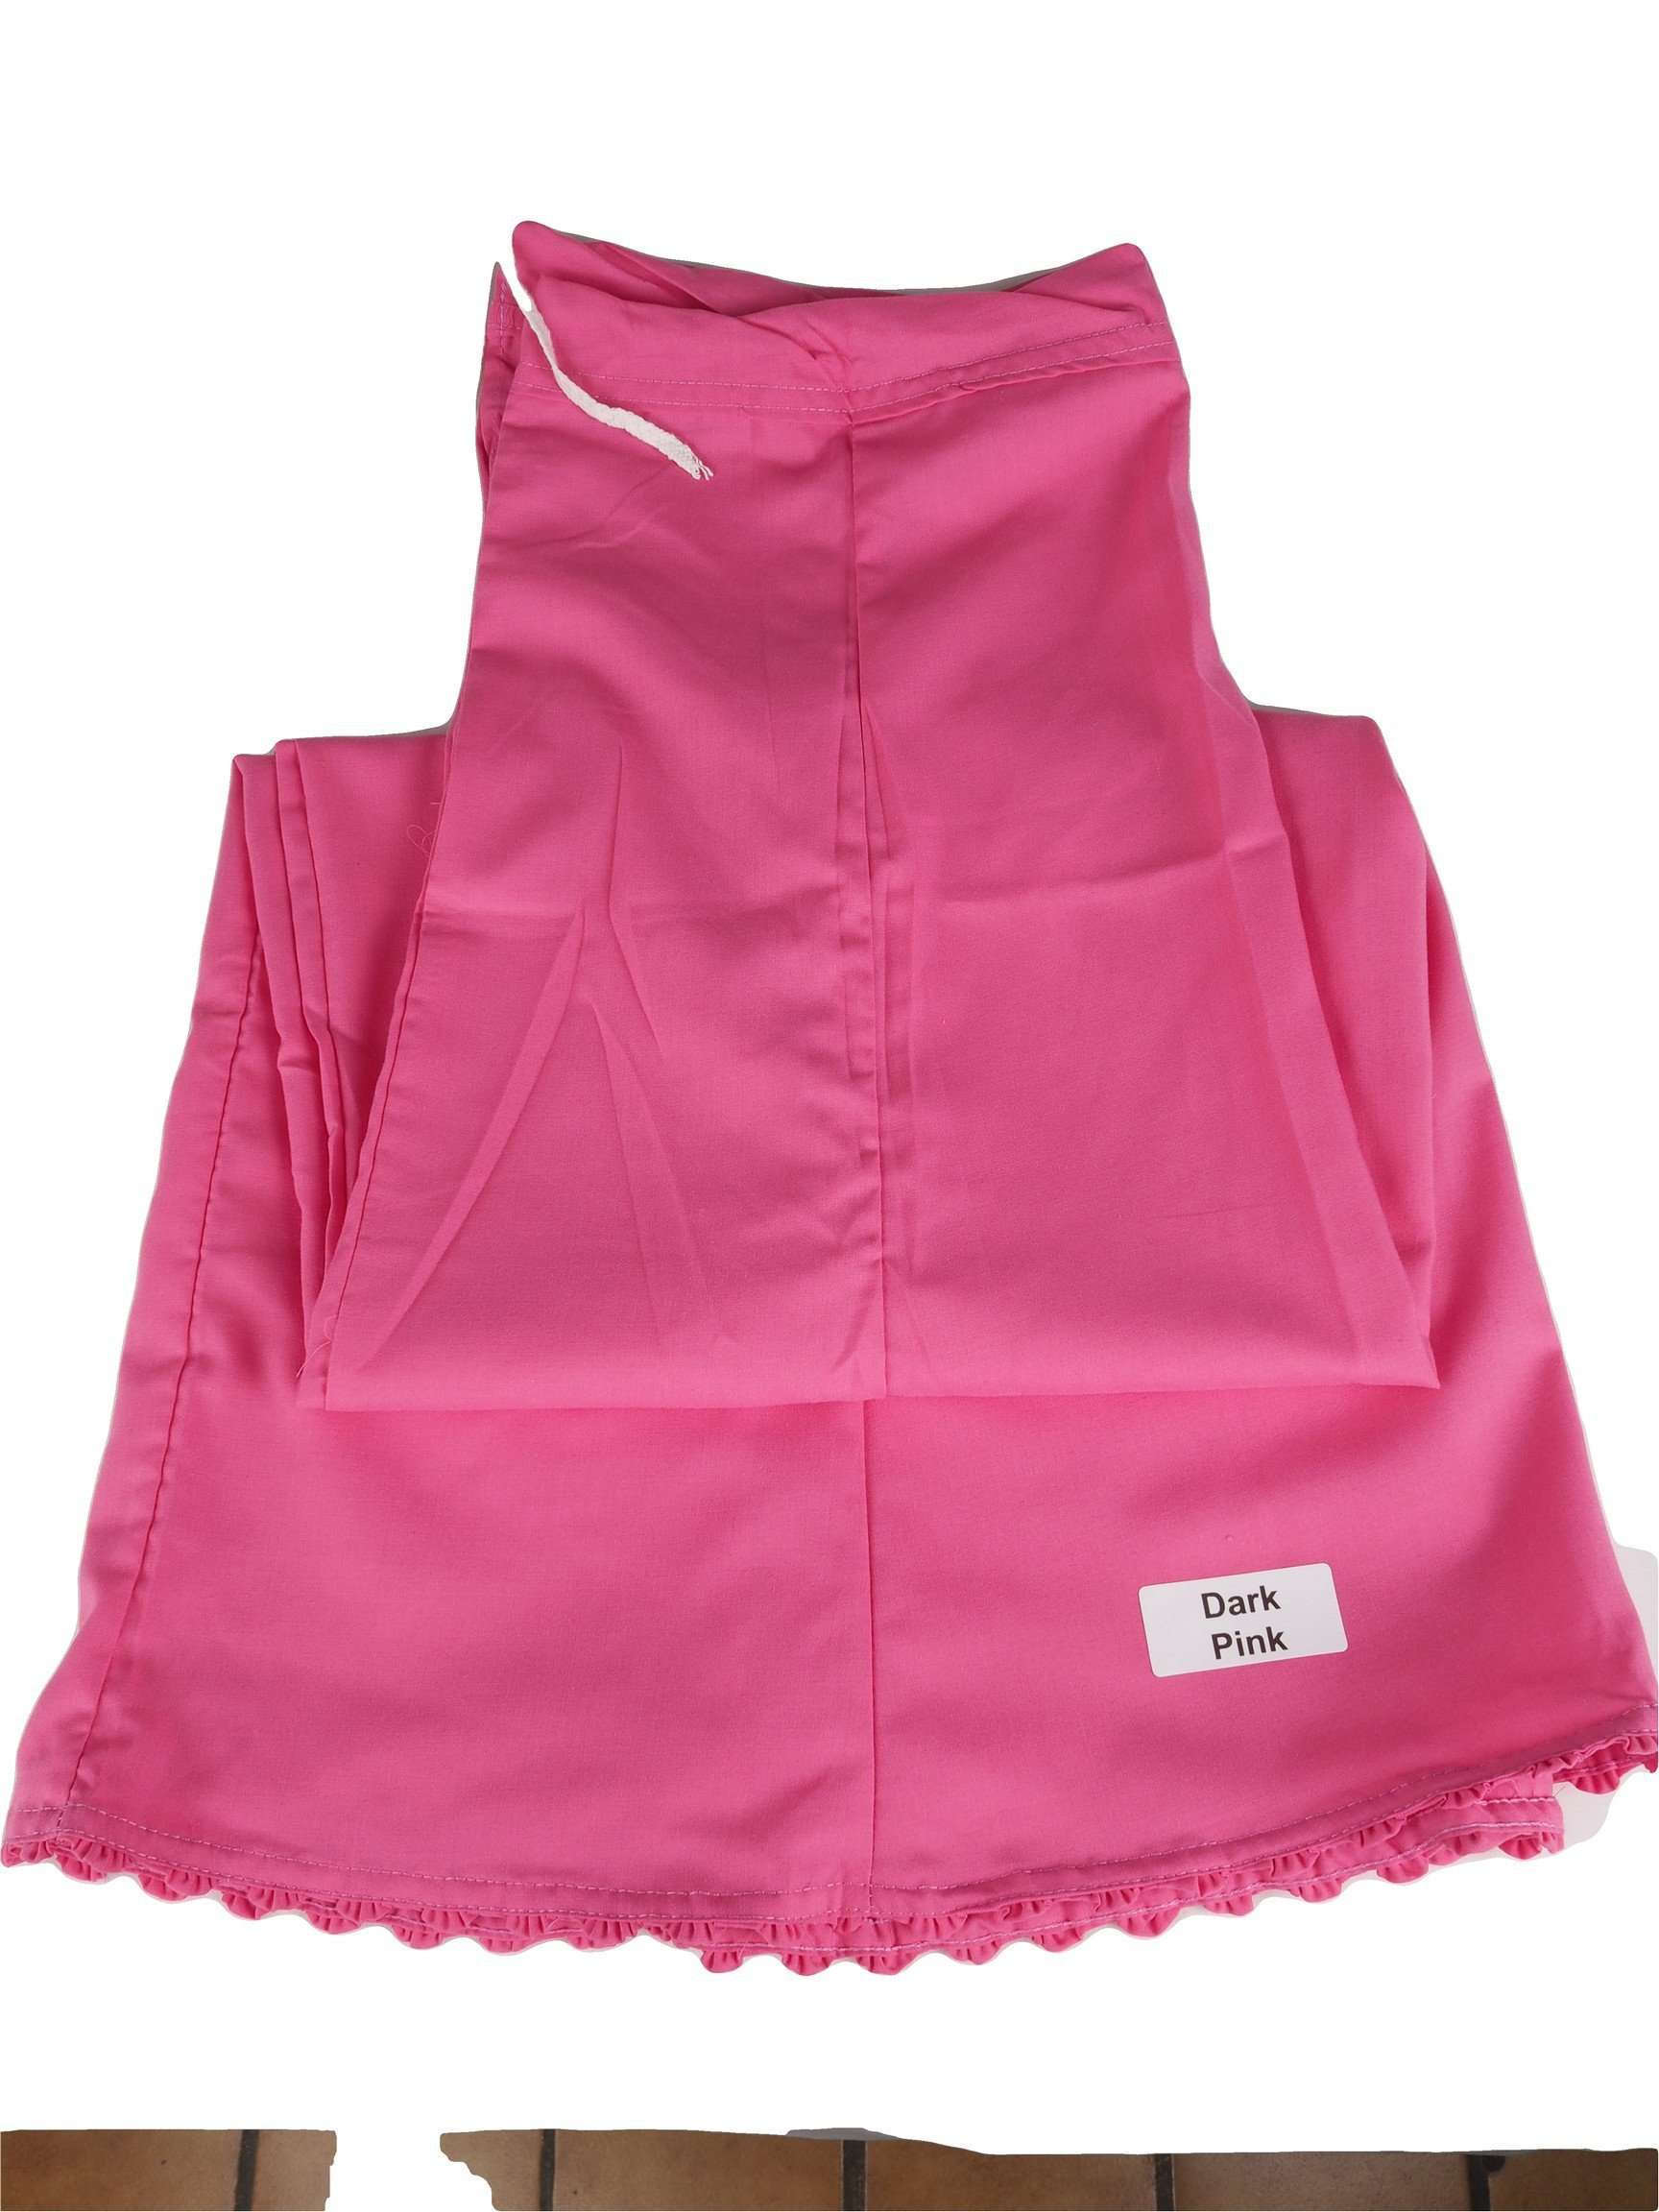 CRAFTSTRIBE Saree Petticoat Baby Pink Inskirt Underskirt Pure